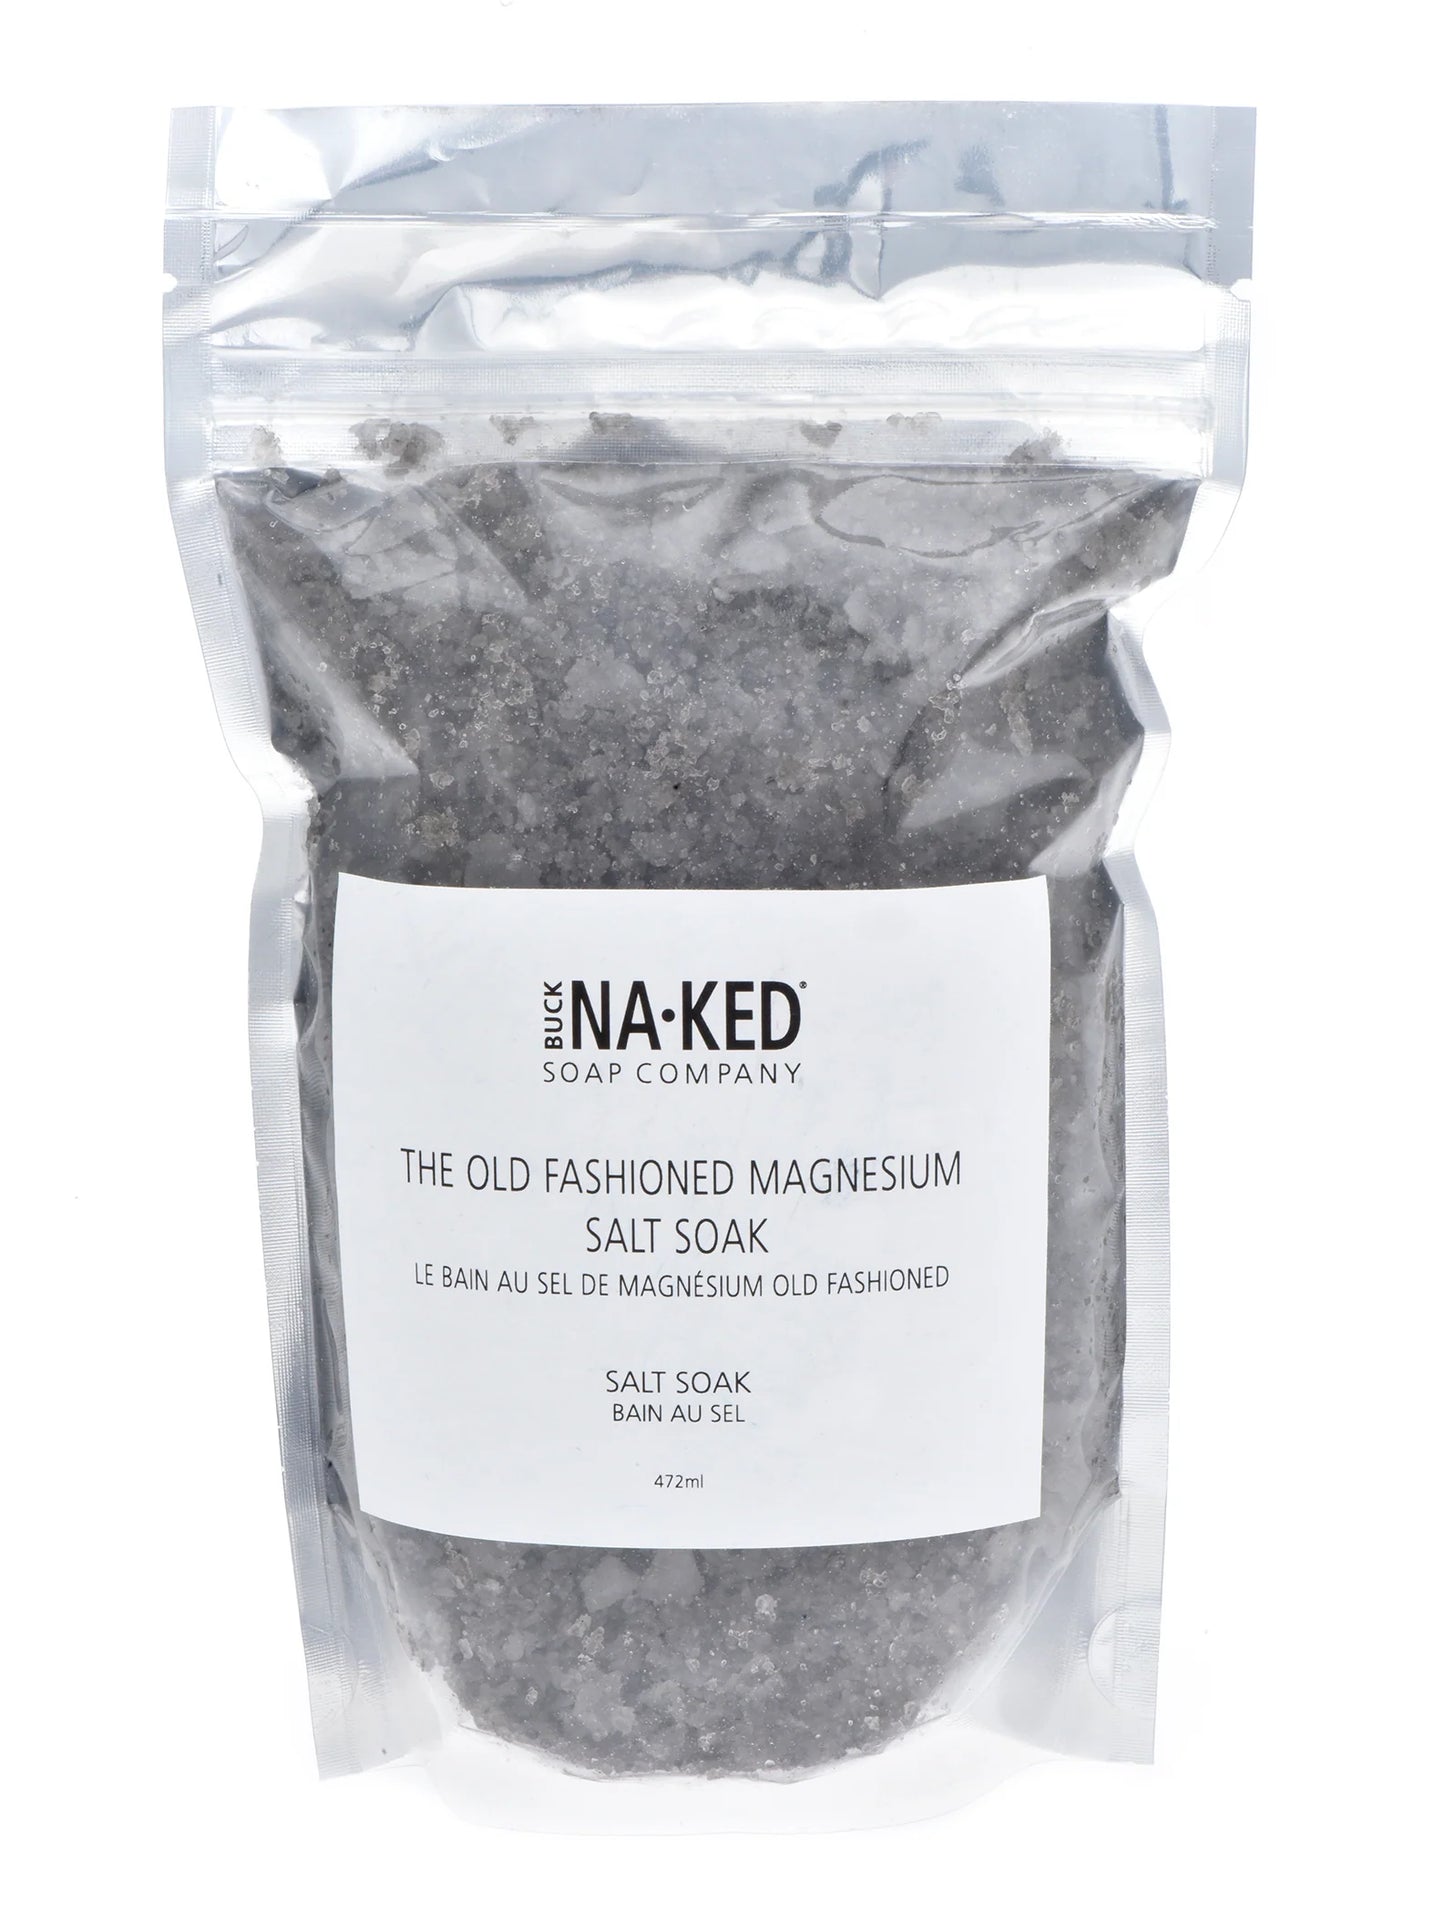 The Old Fashioned Magnesium Salt Soak